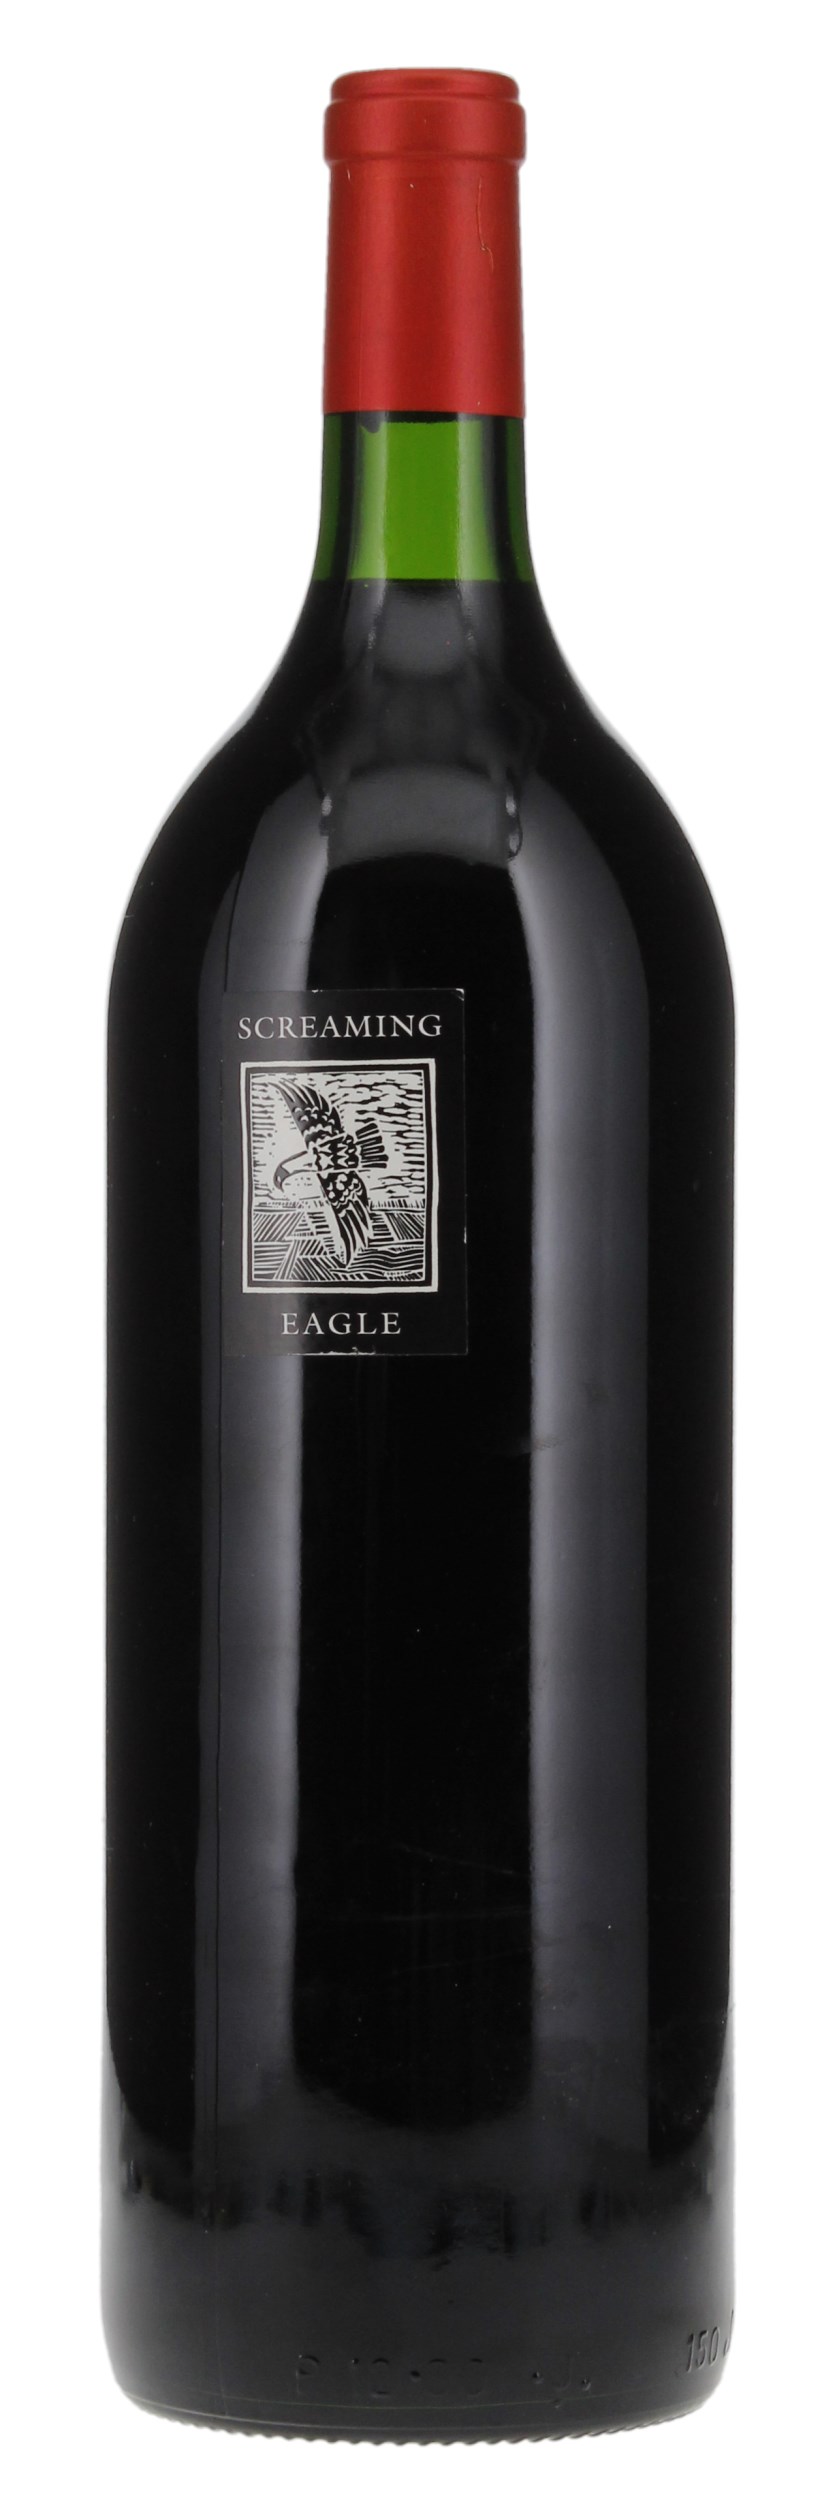 1997 Screaming Eagle Cabernet Sauvignon, 1.5ltr